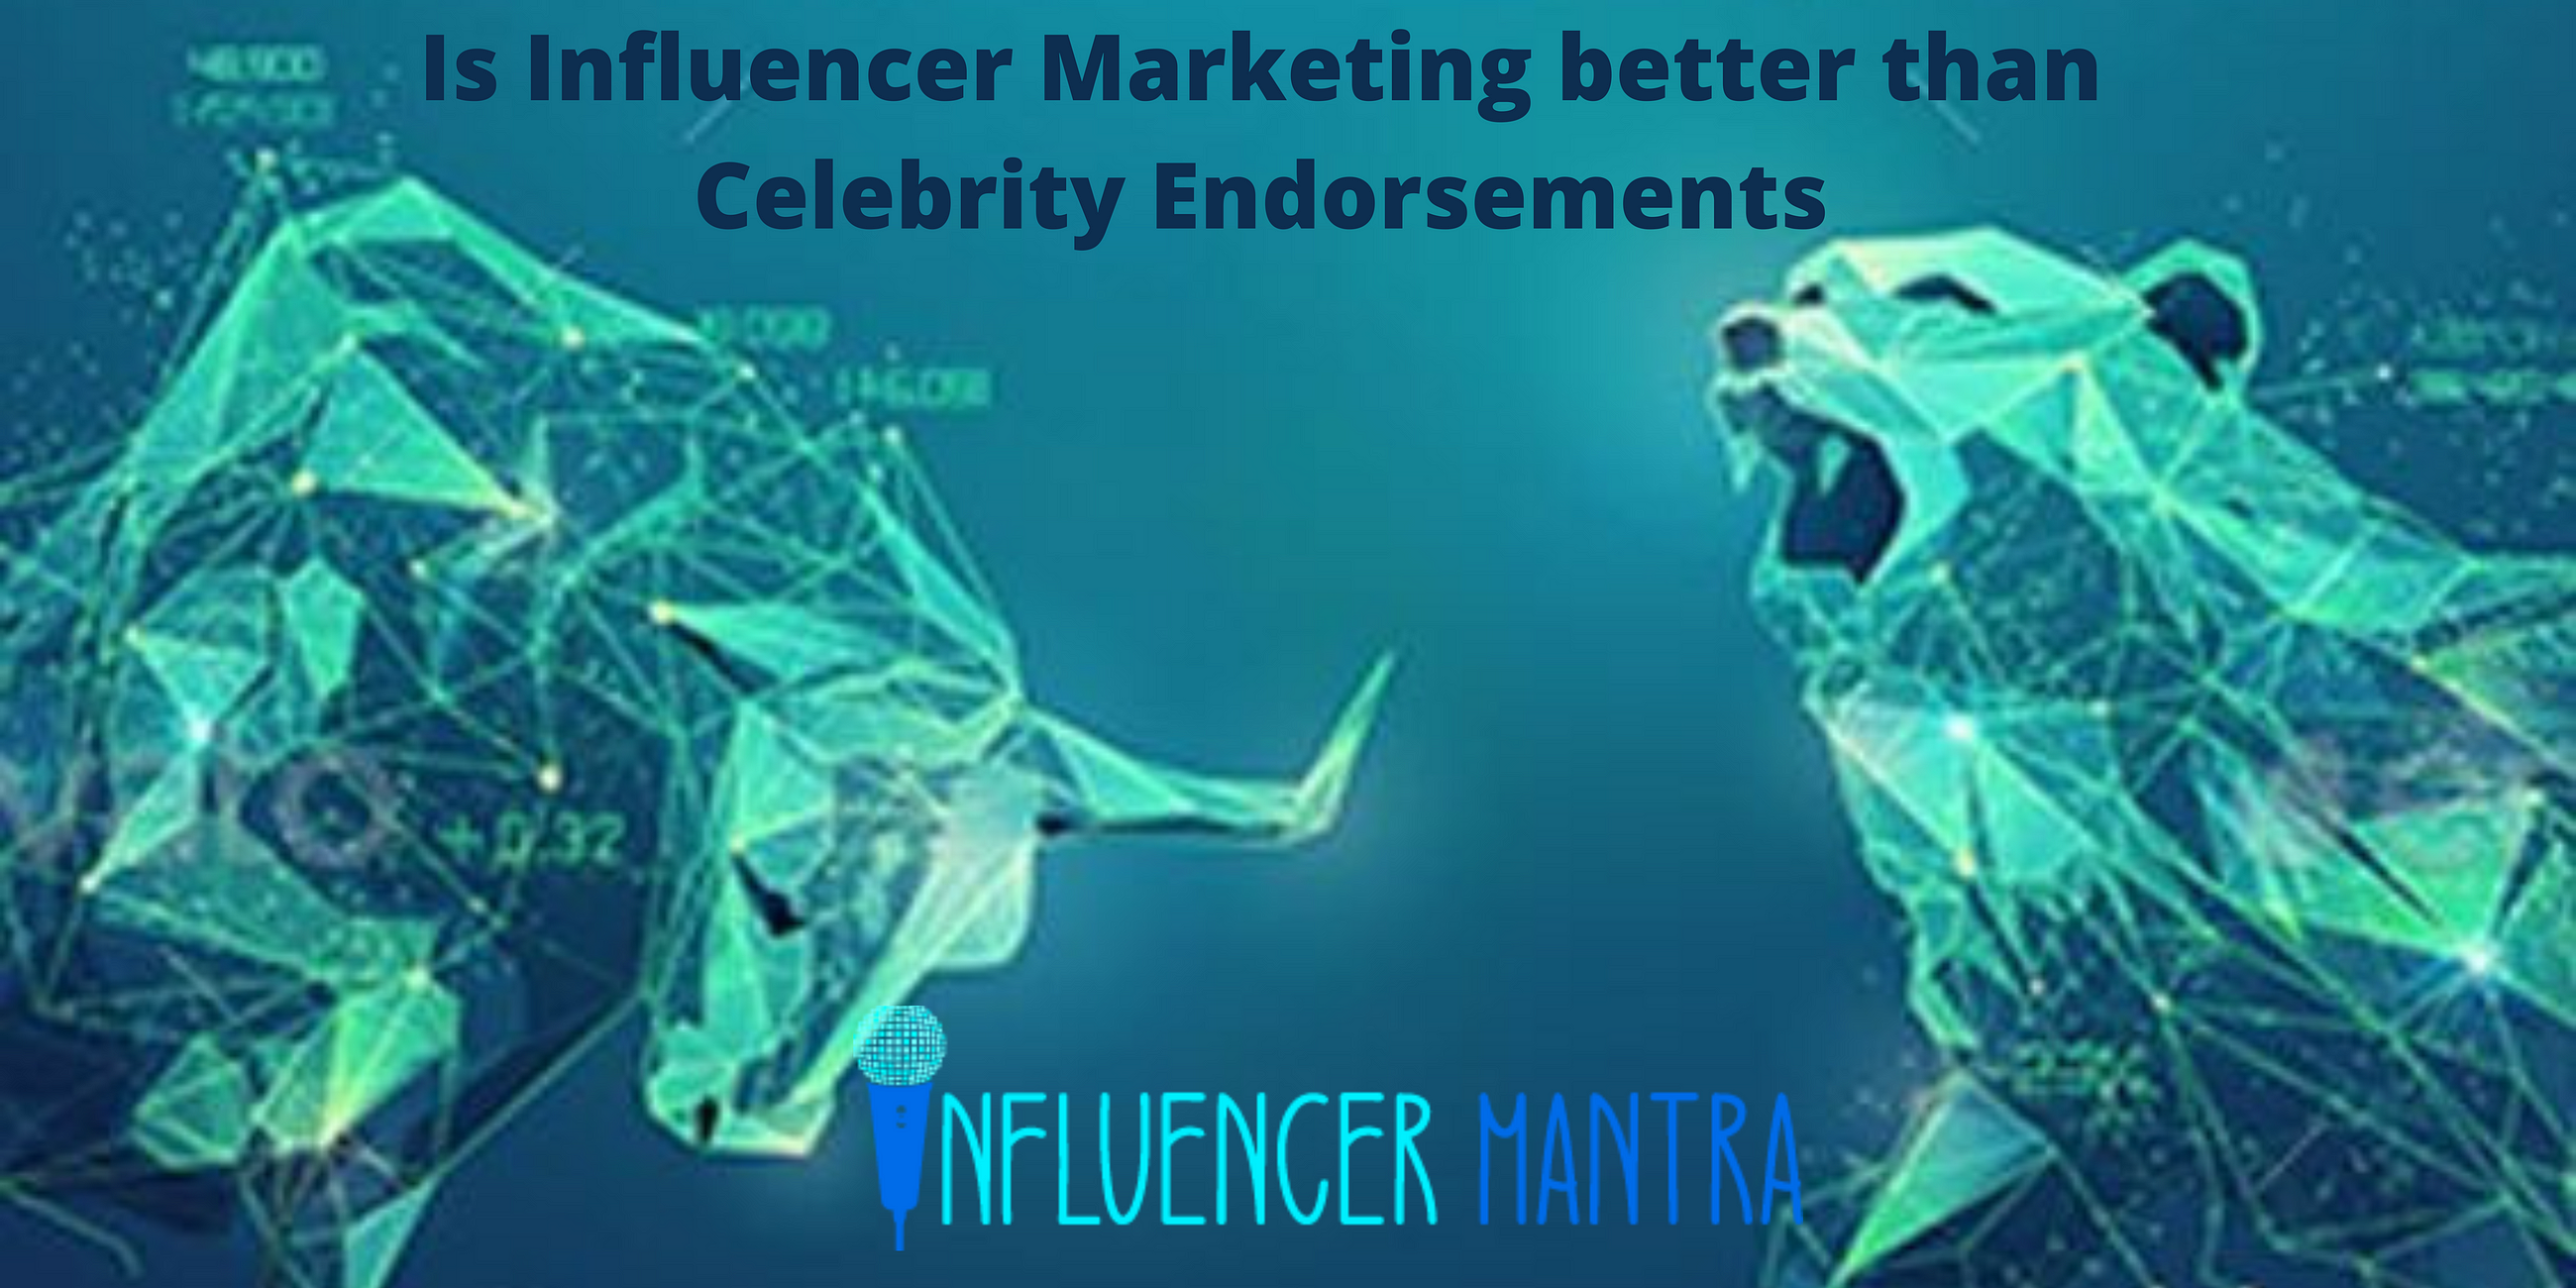 Is Influencer Marketing Better than Celebrity Endorsements?